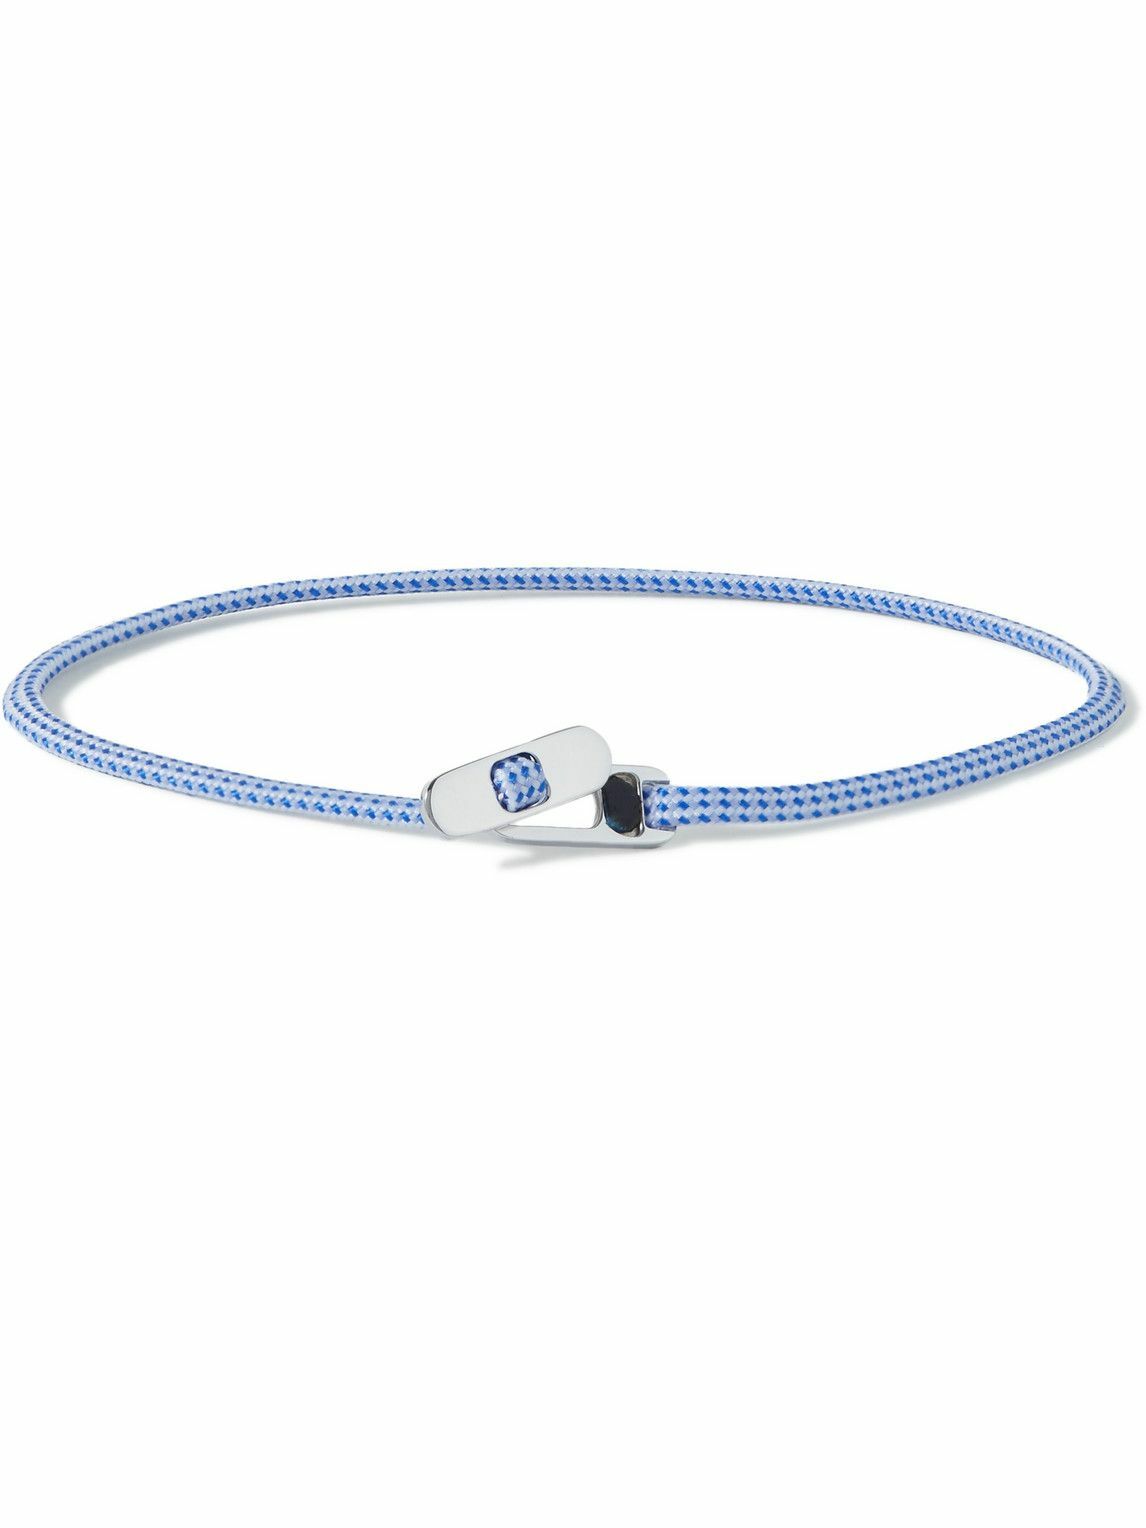 Photo: Miansai - Metric Rope and Silver Bracelet - Blue